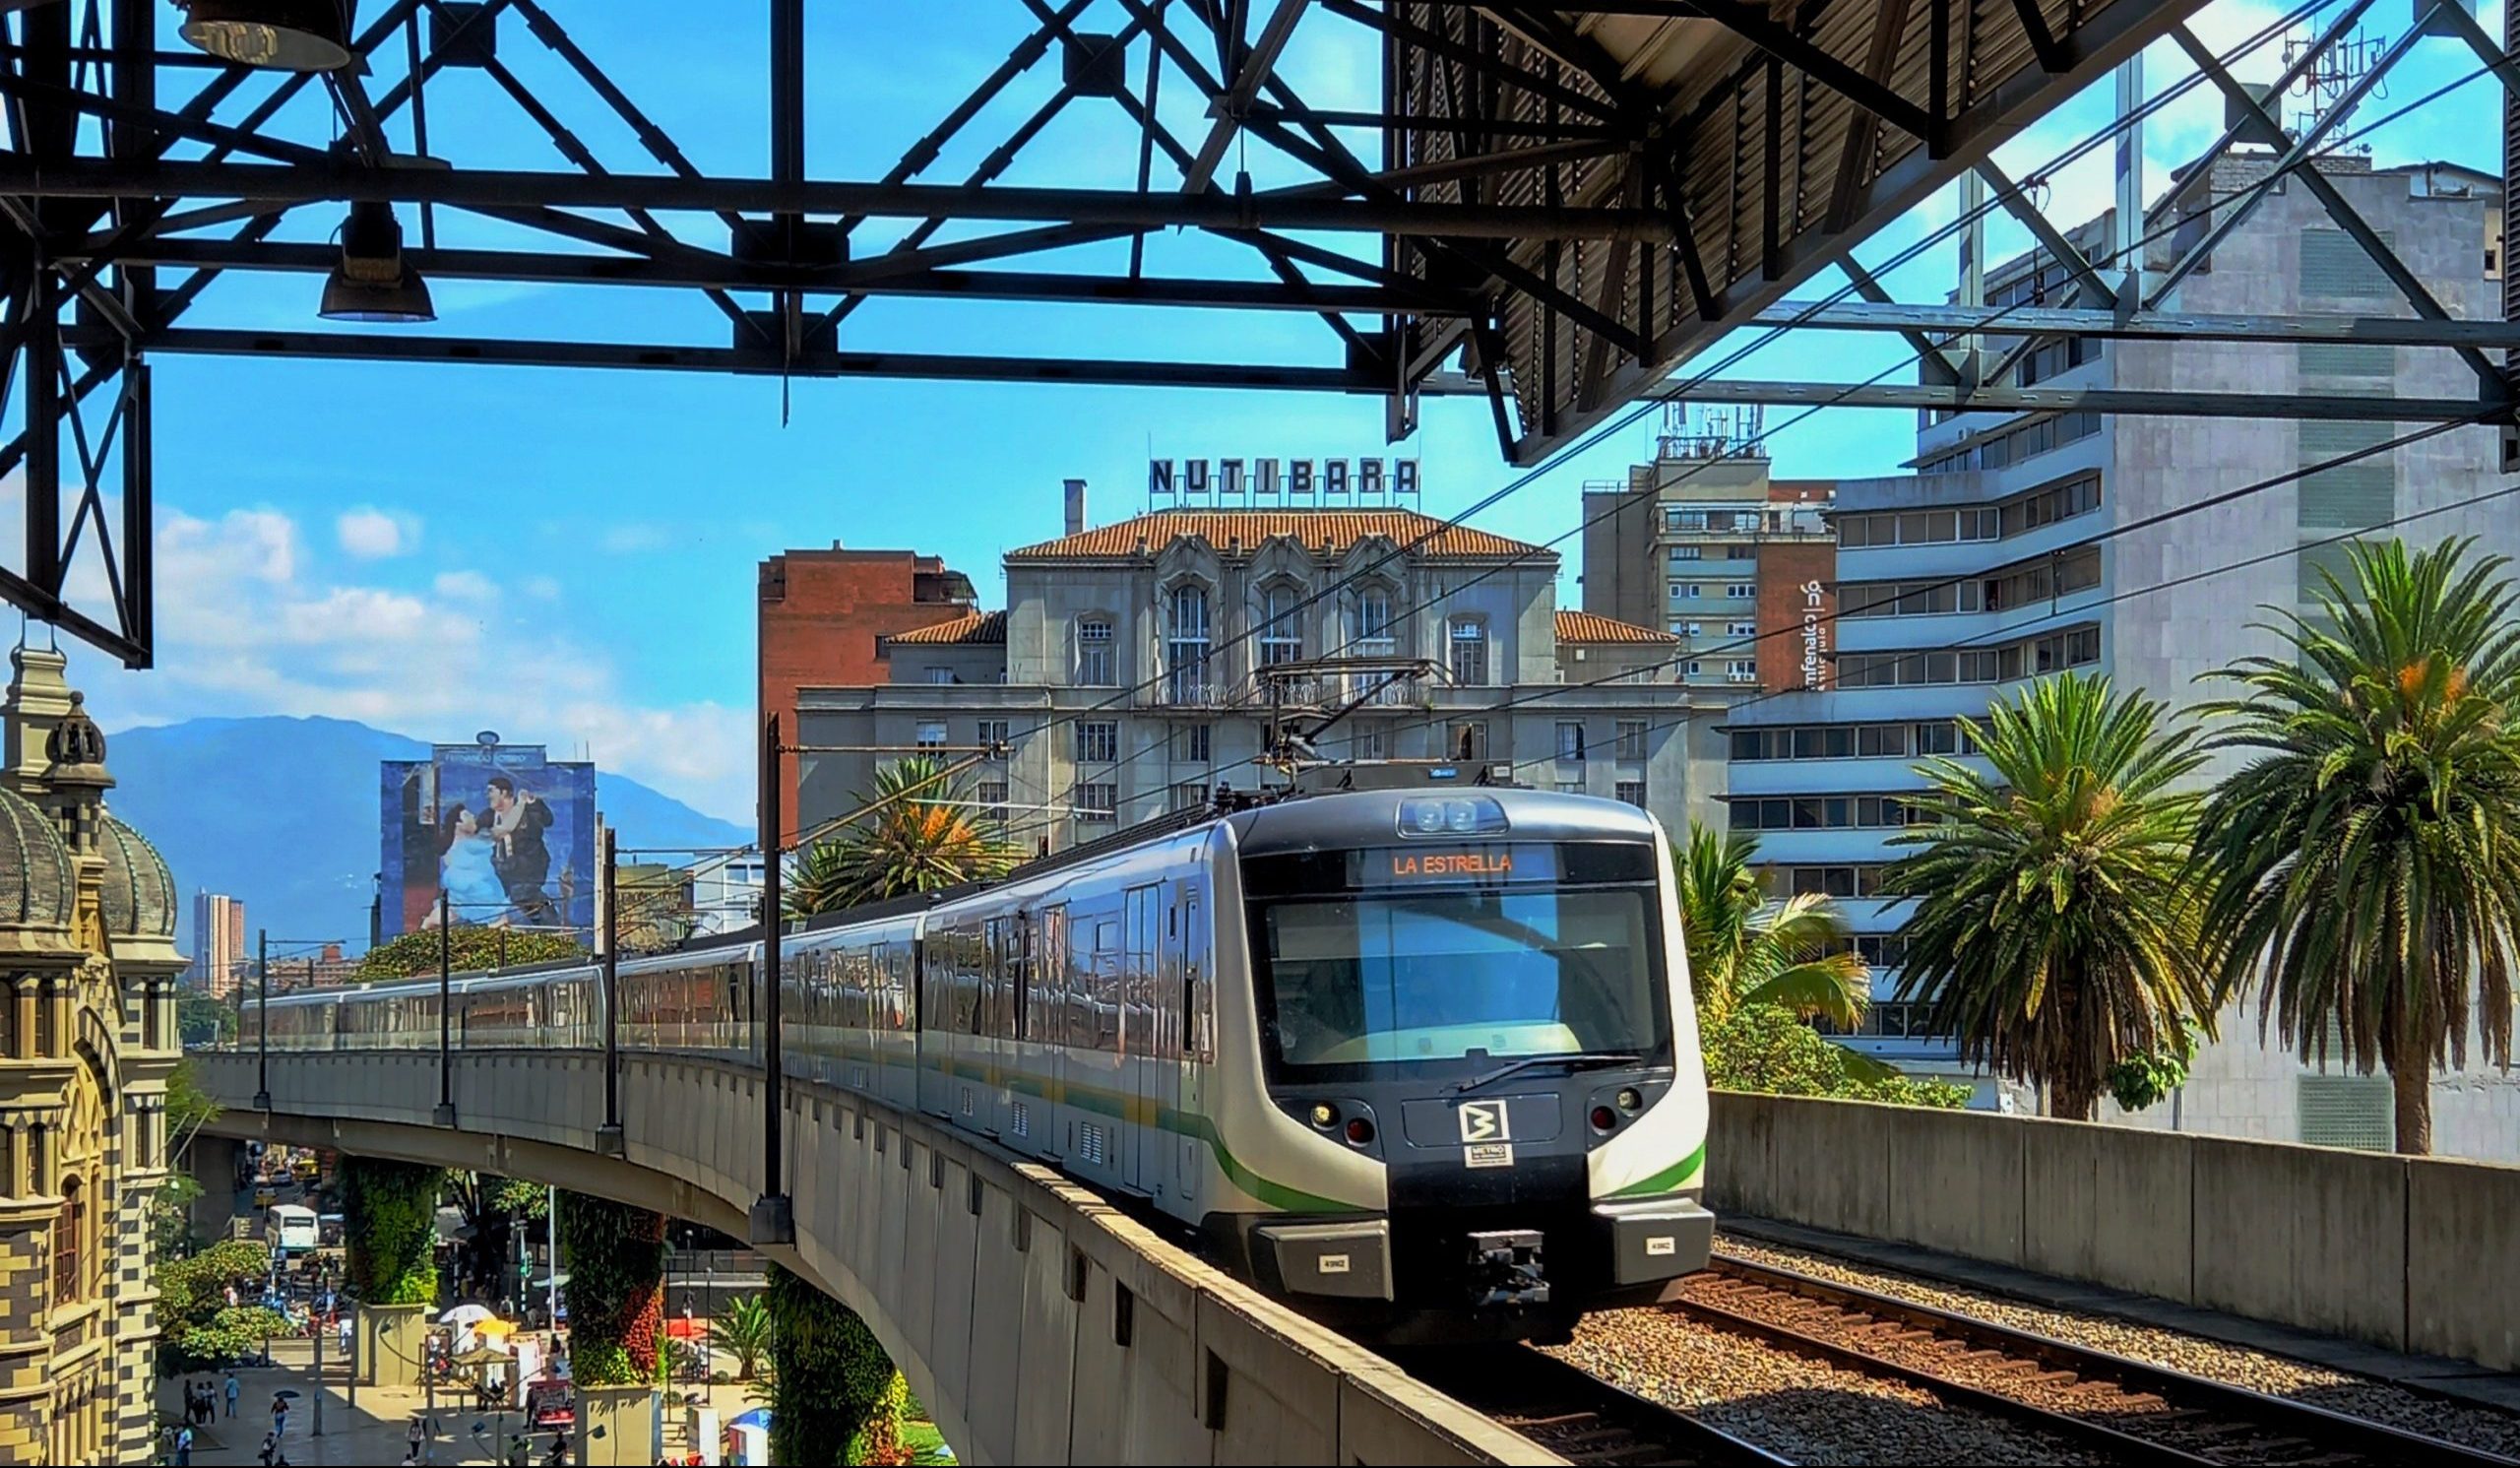 The Medellin Metro Experience
